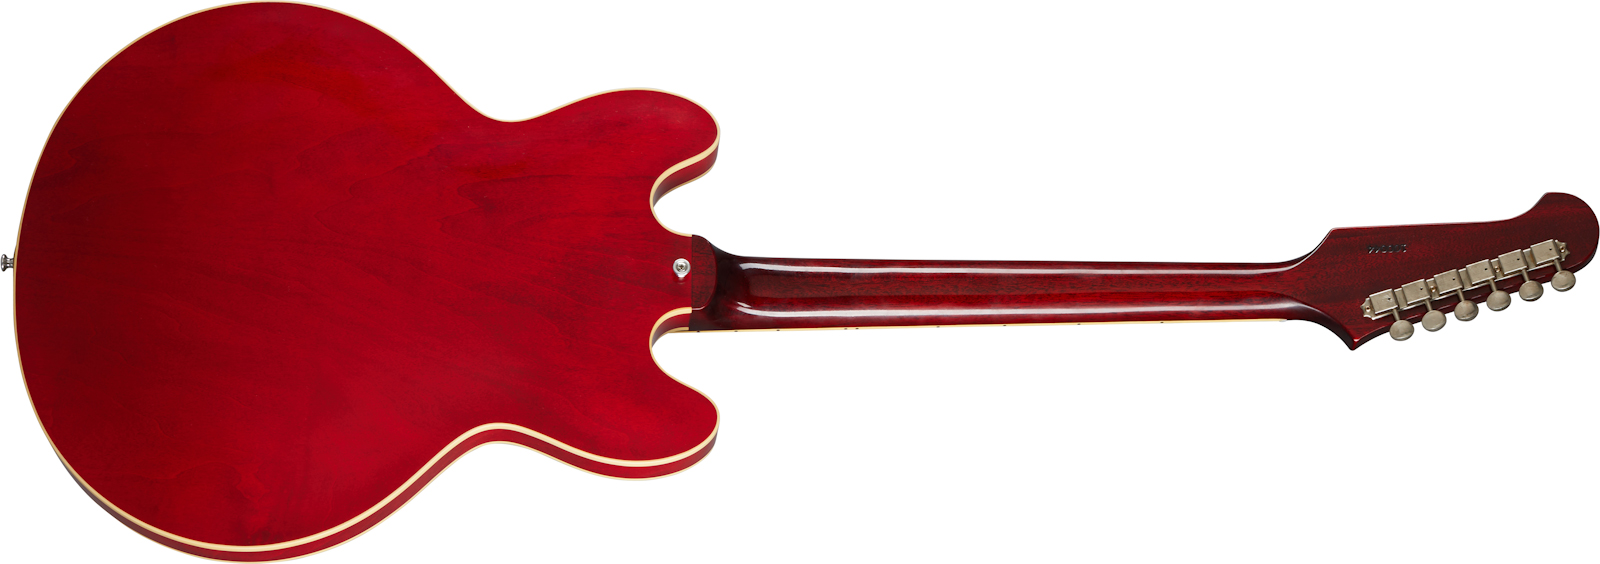 Gibson Custom Shop Trini Lopez Standard 1964 Reissue 2h Ht Rw - Vos Sixties Cherry - Semi-hollow electric guitar - Variation 1